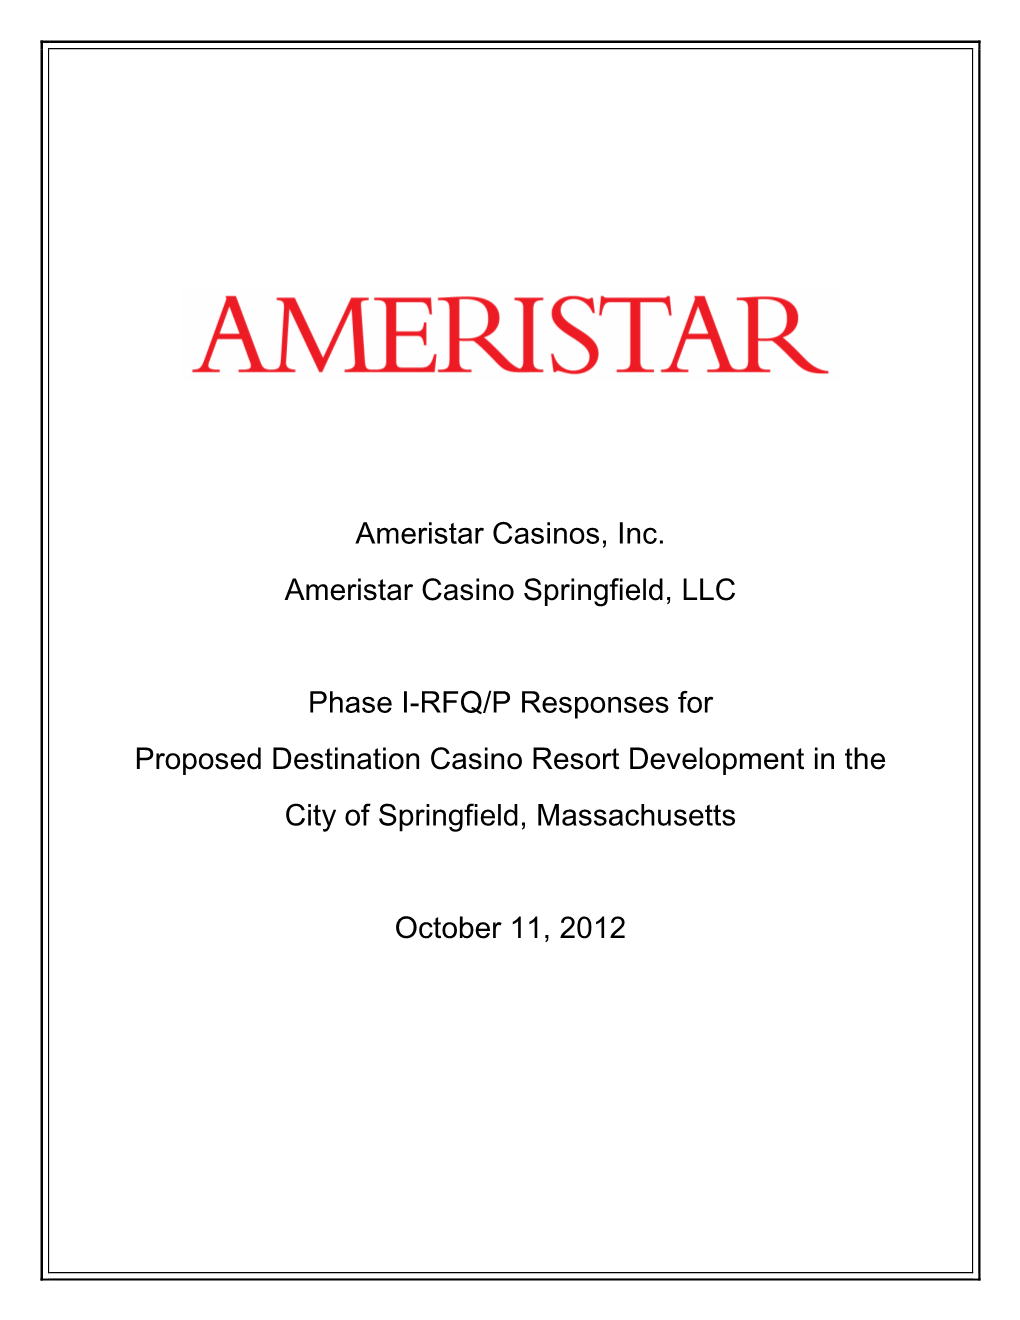 Ameristar Casinos, Inc. Ameristar Casino Springfield, LLC Phase I